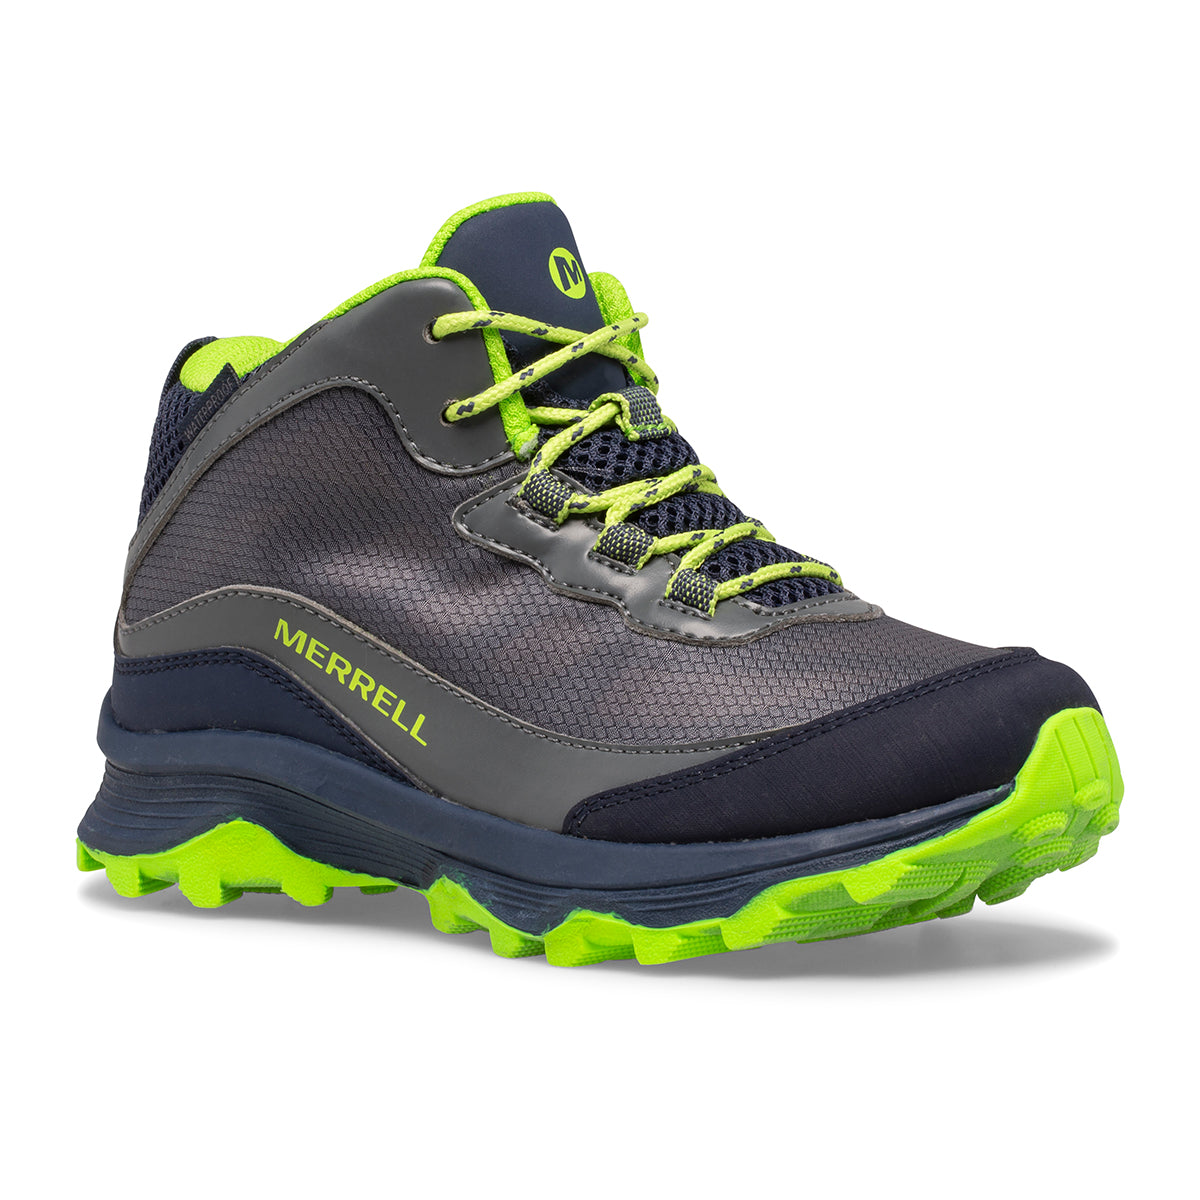 Moab Speed Mid Waterproof Hiking Boot Navy/Grey/Lime